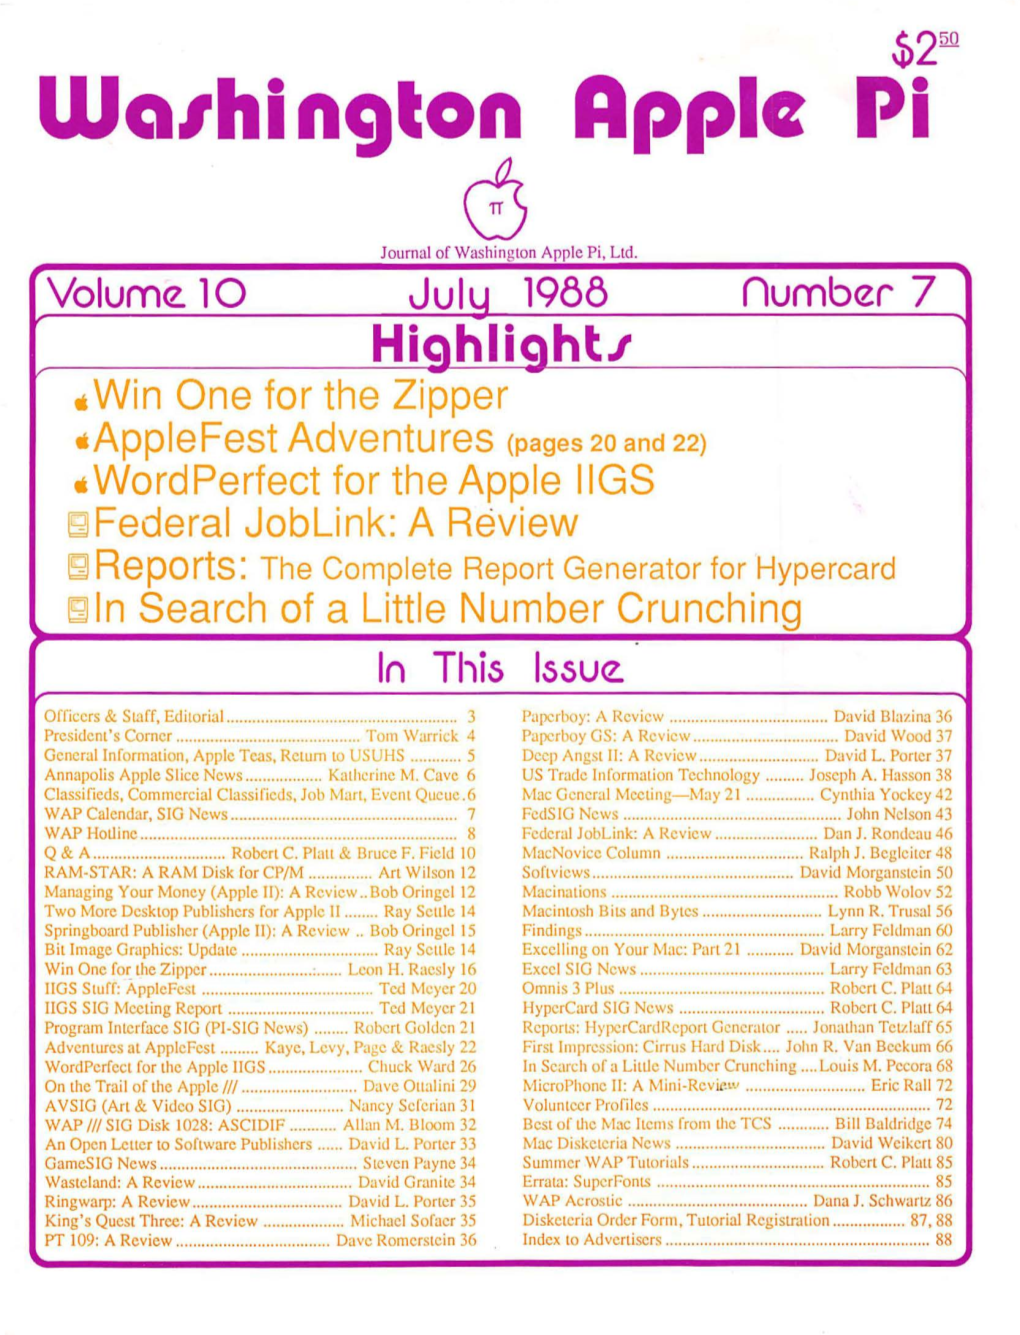 Washington Apple Pi Journal, July 1988